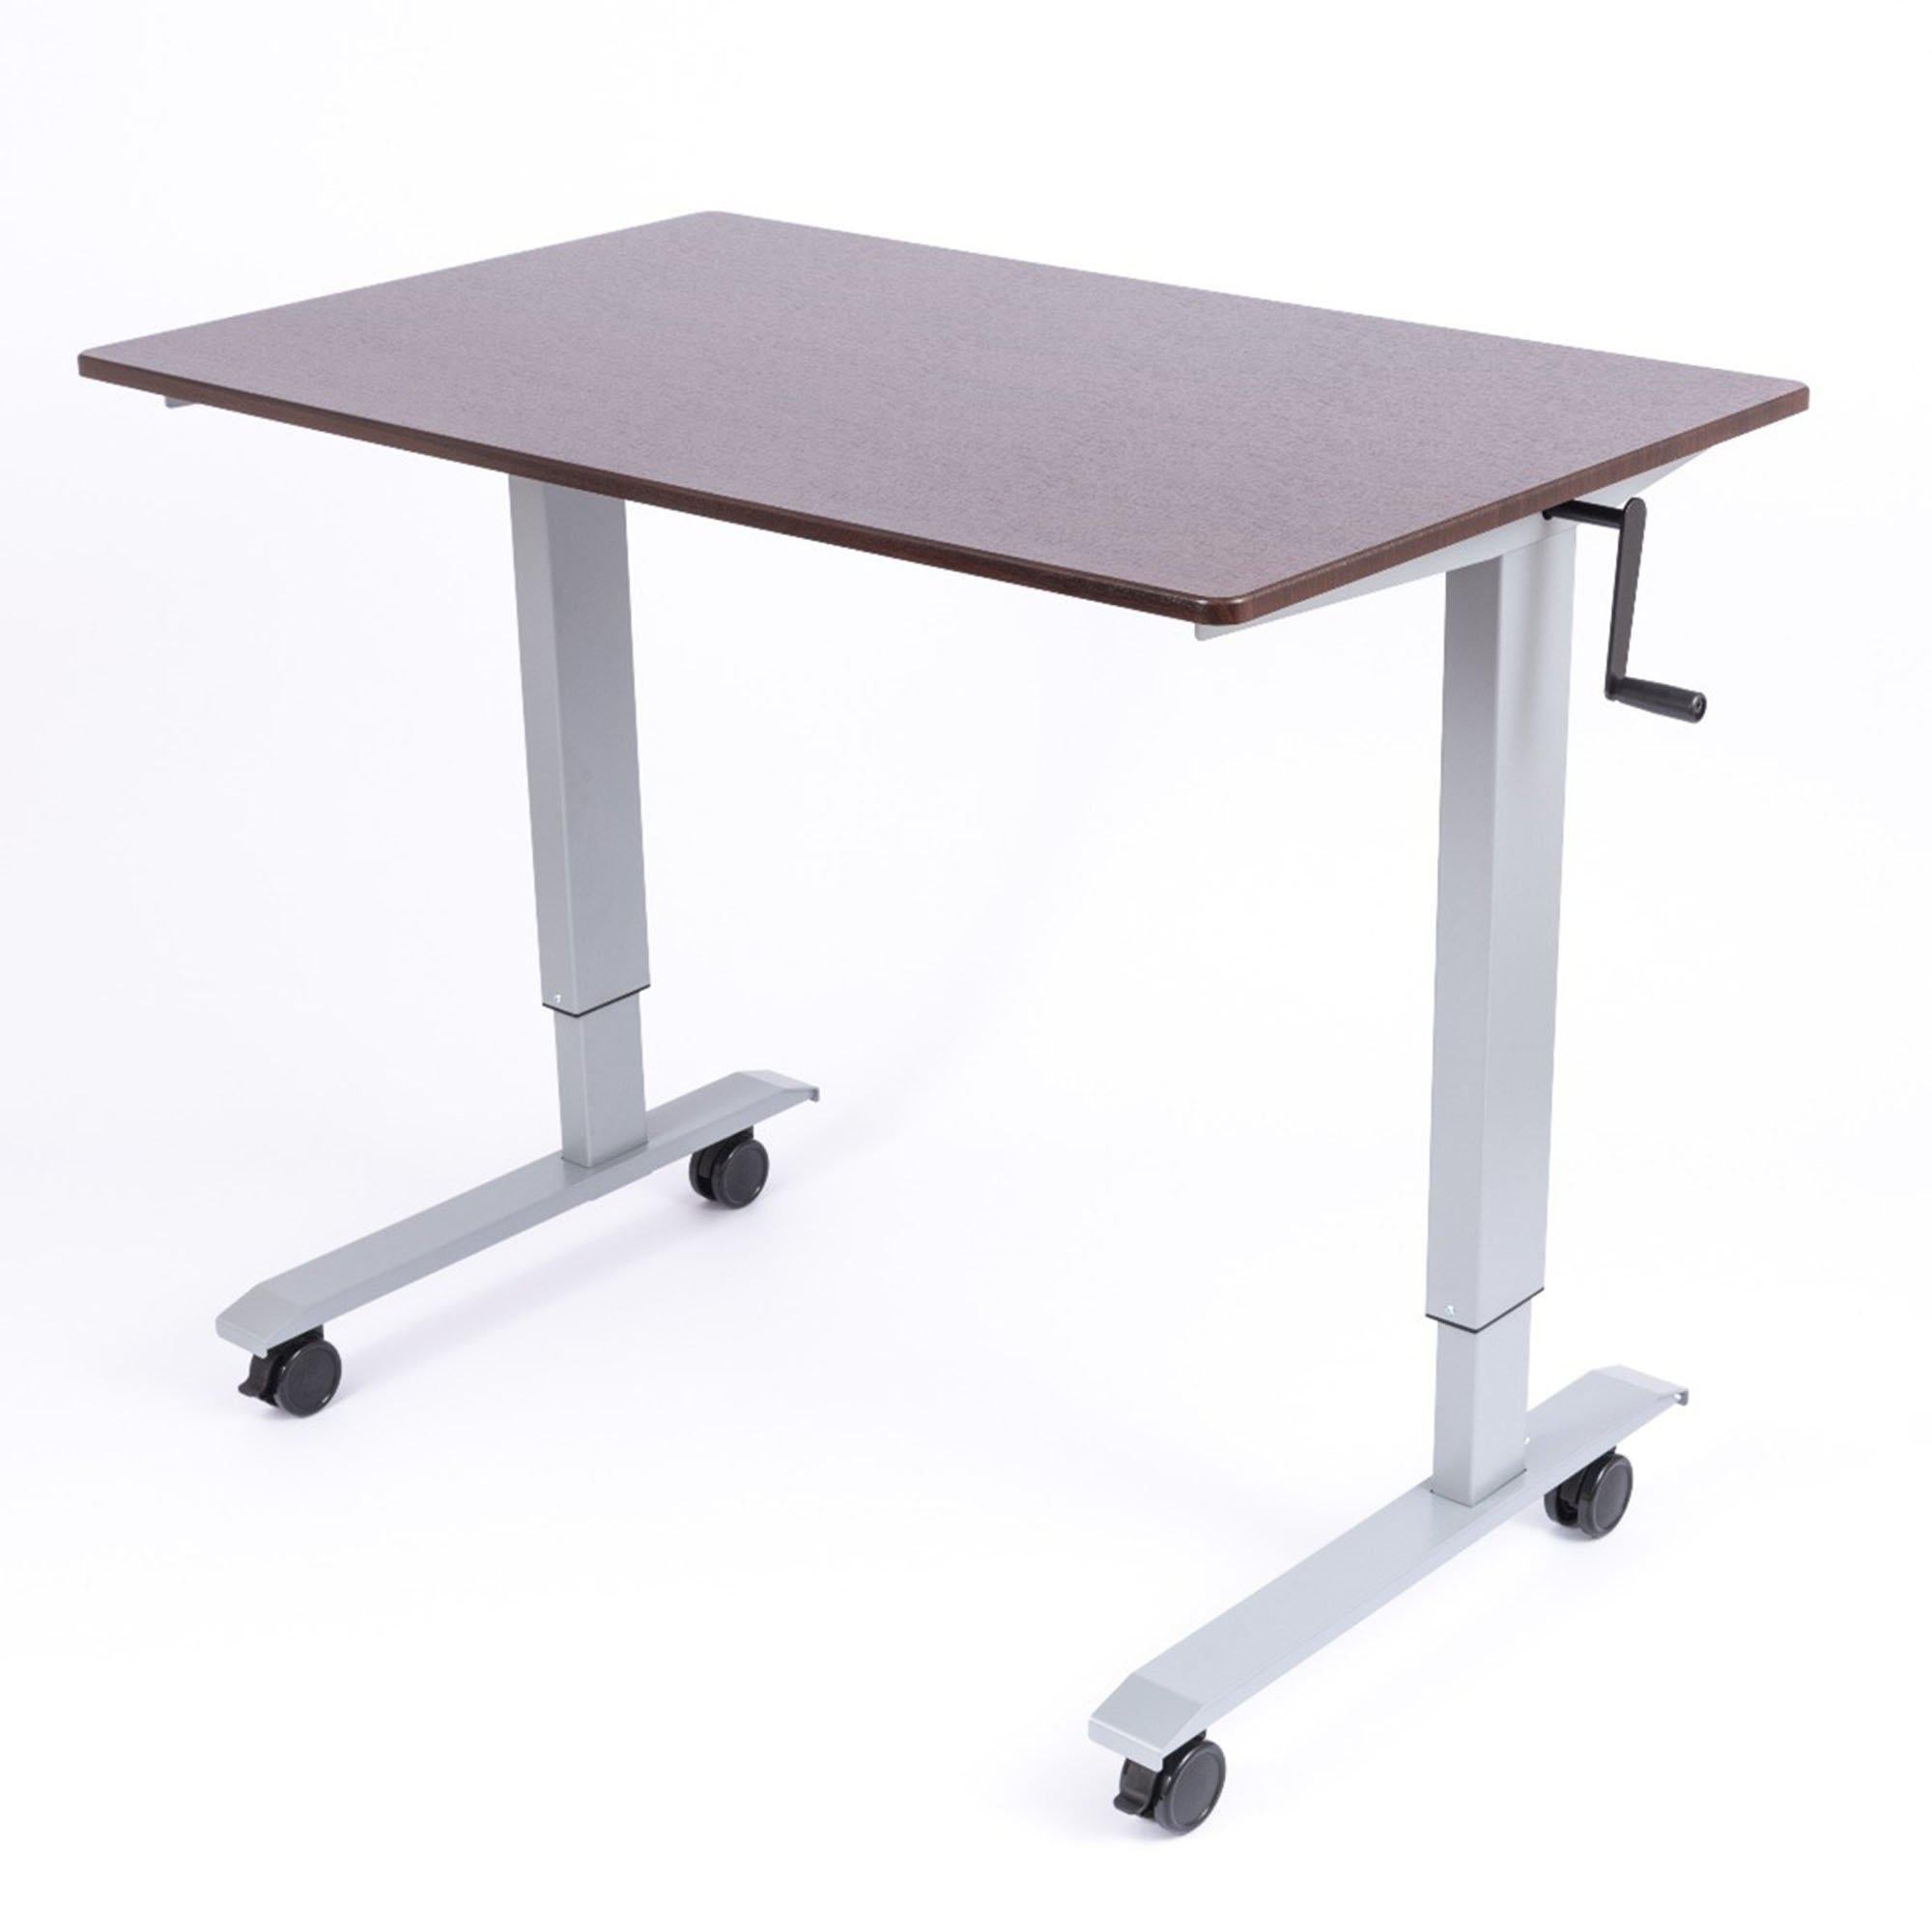 High Speed Crank Adjustable Stand Up Desk, 48" W